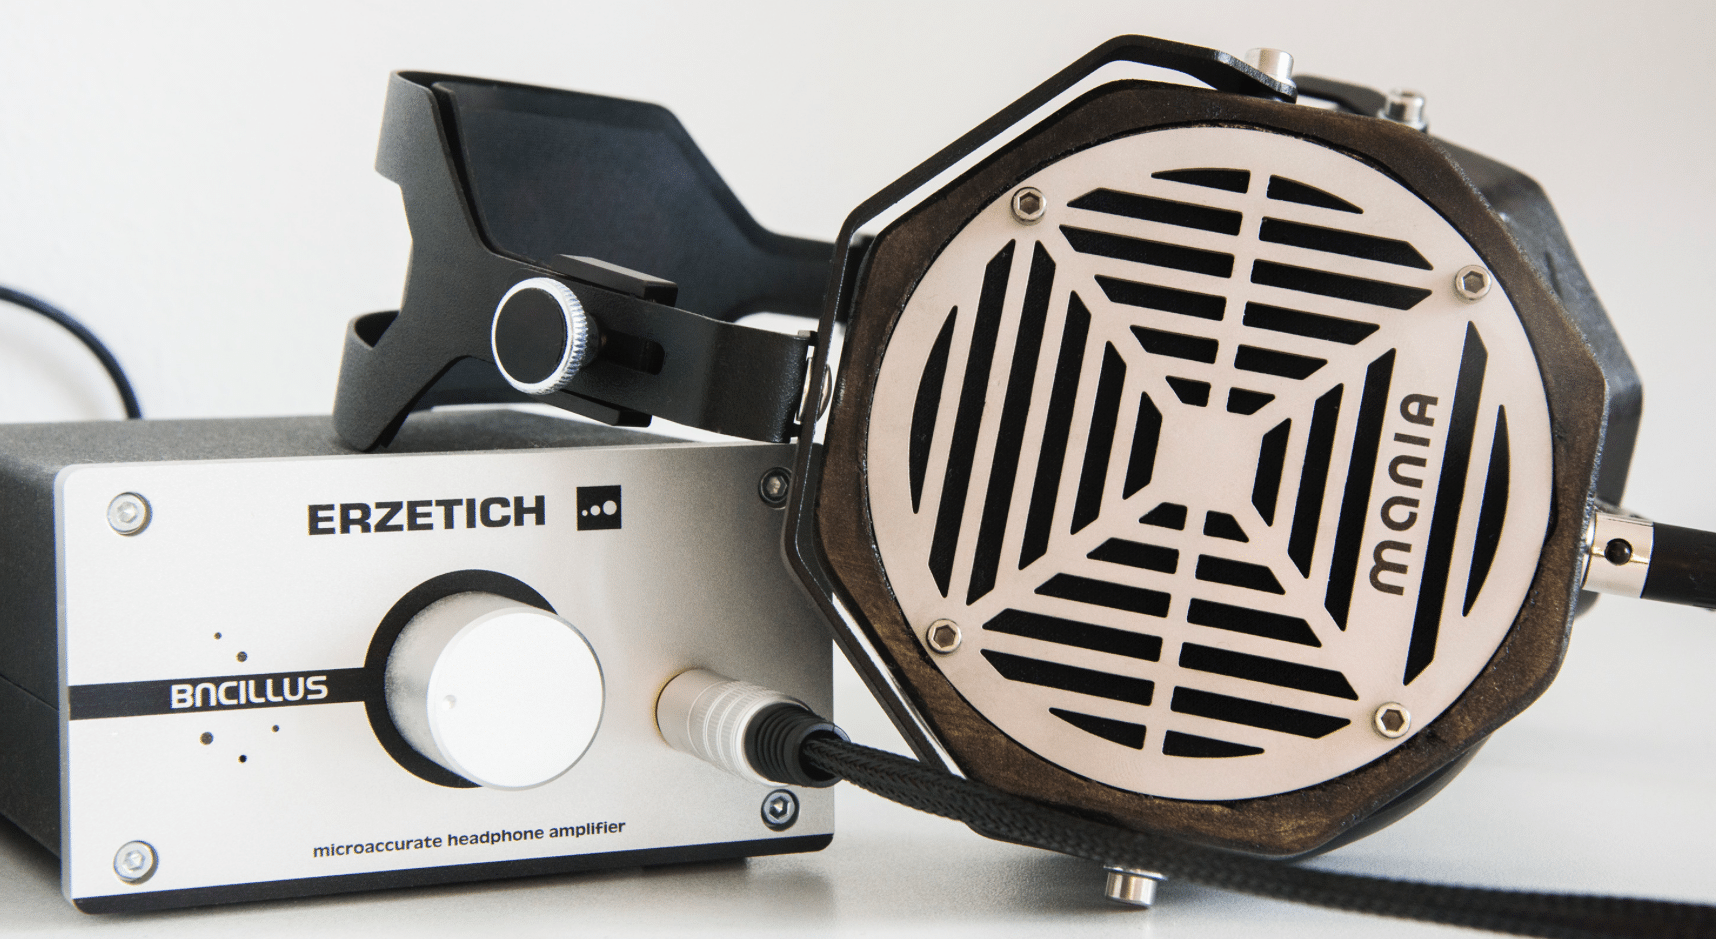 Phobos & Mania Headphones from Erzetich Audio